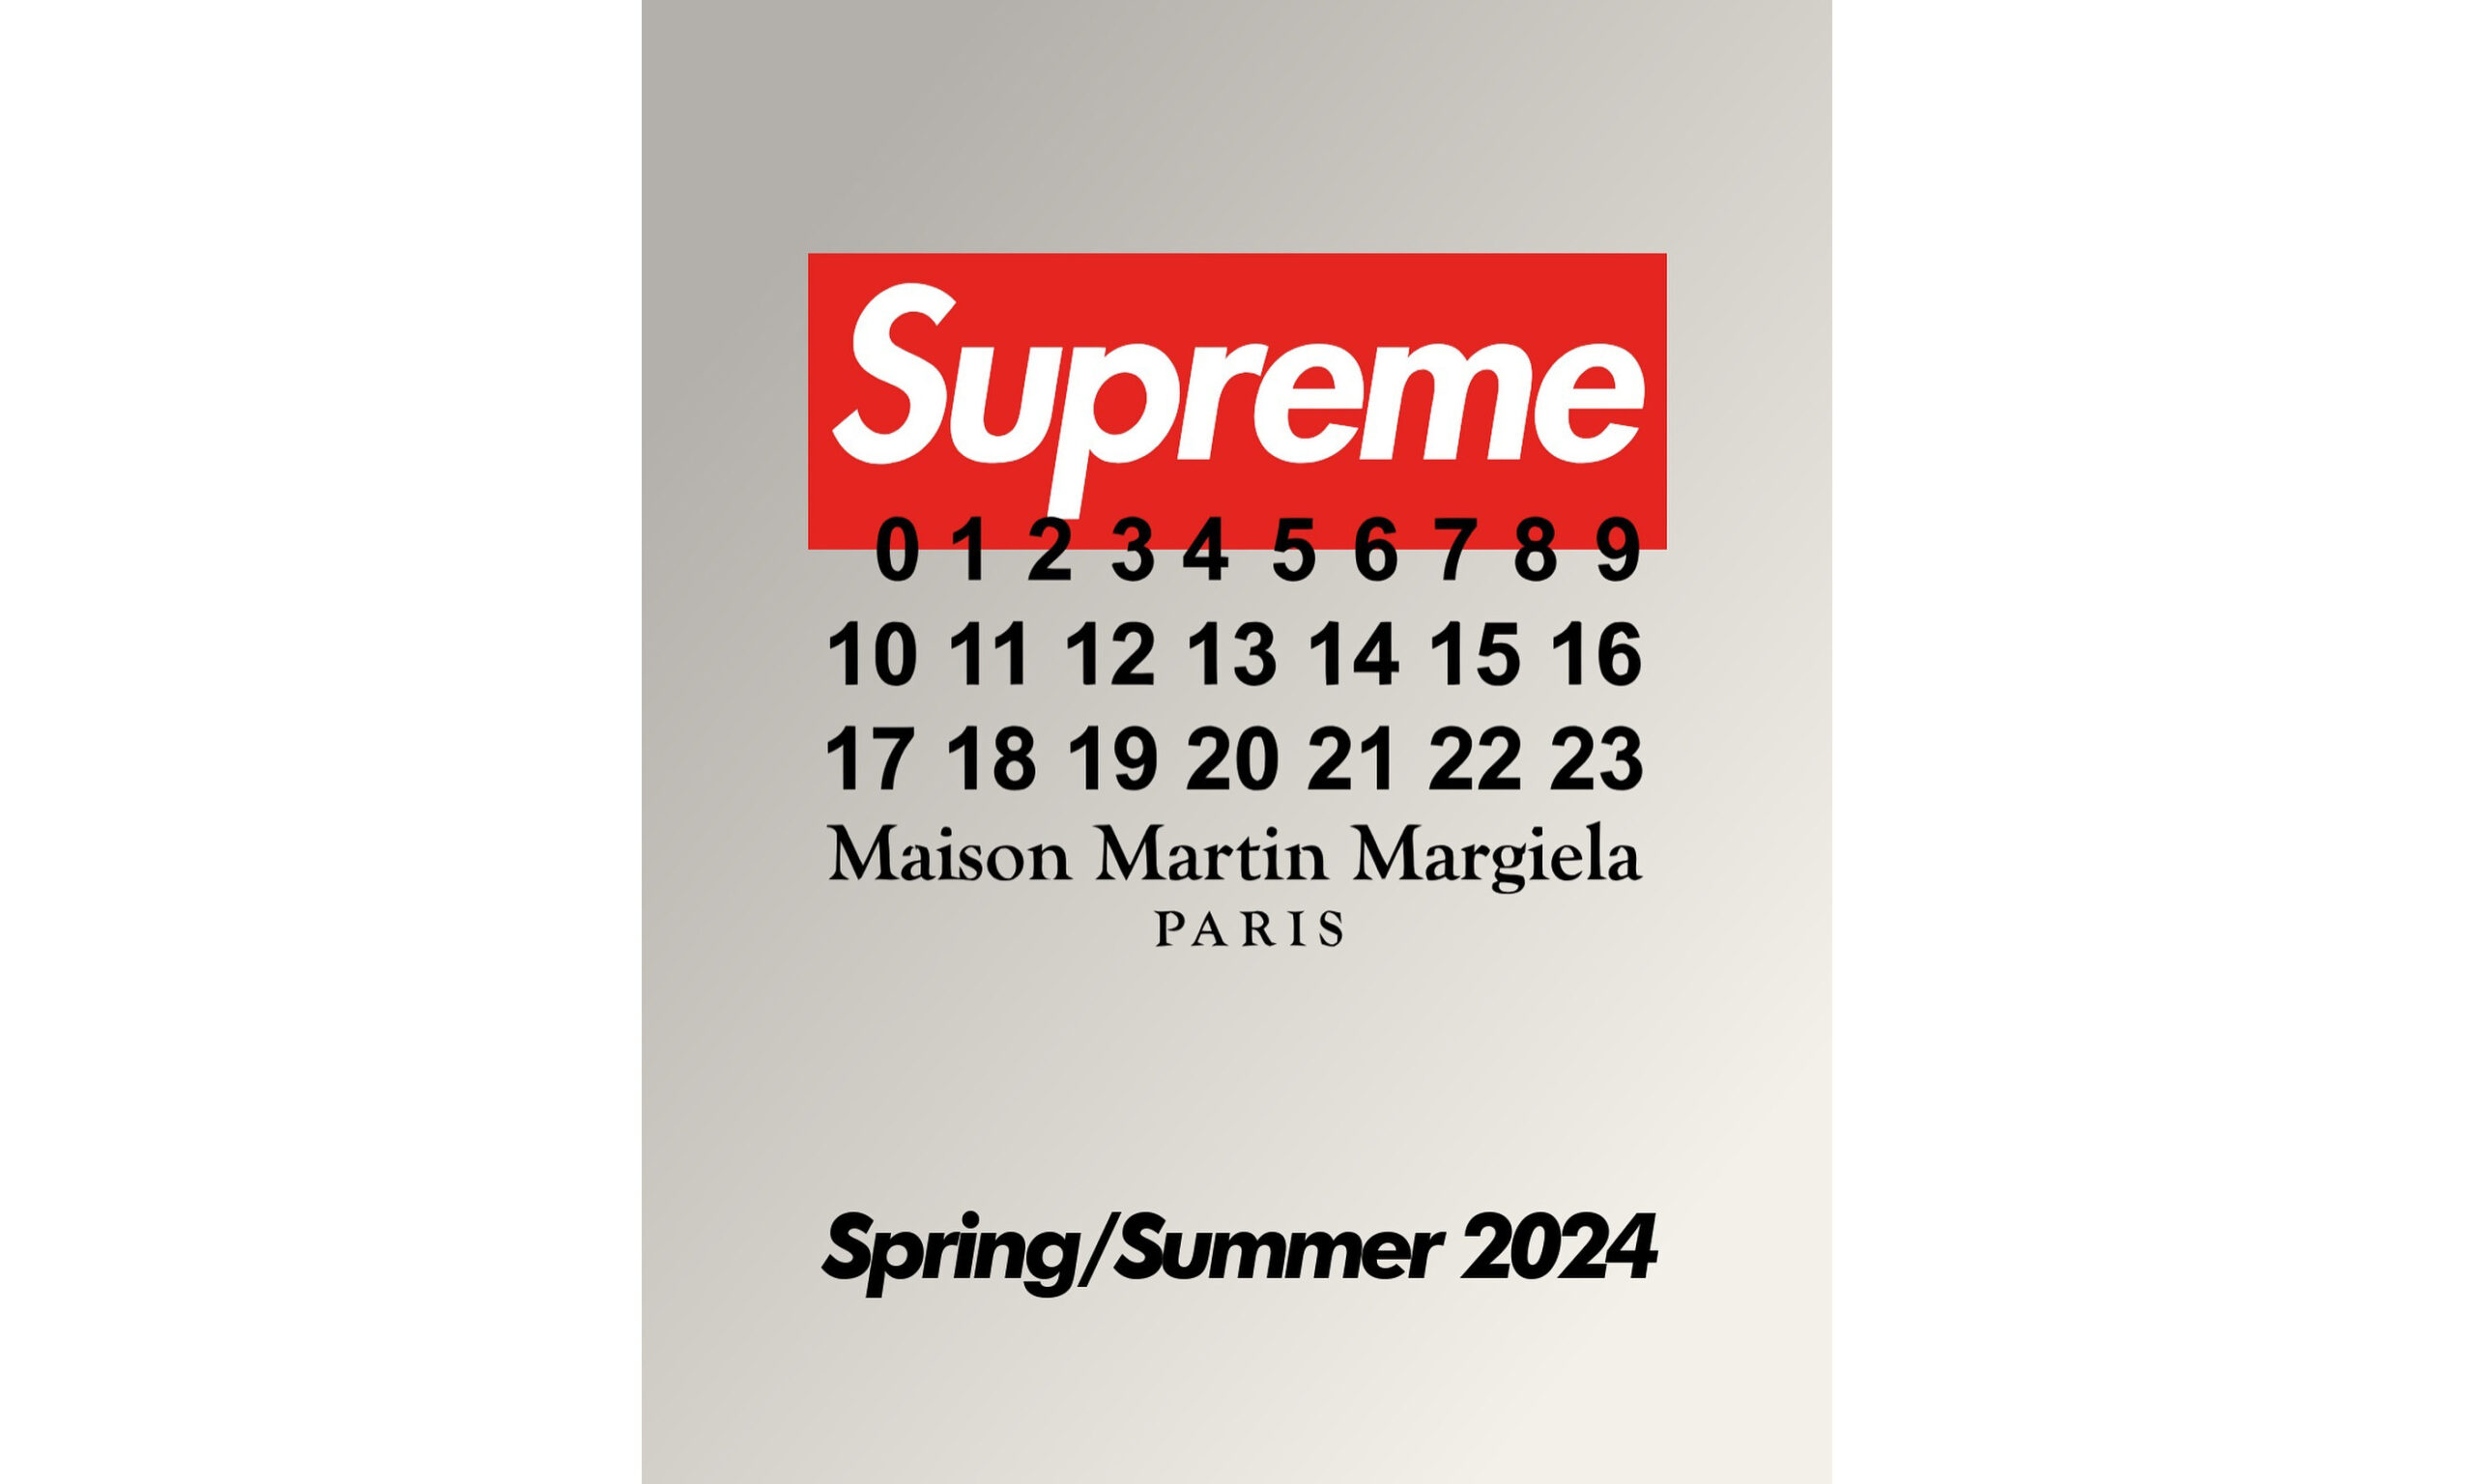 Maison Margiela x Supreme 或将于春夏系列中登场